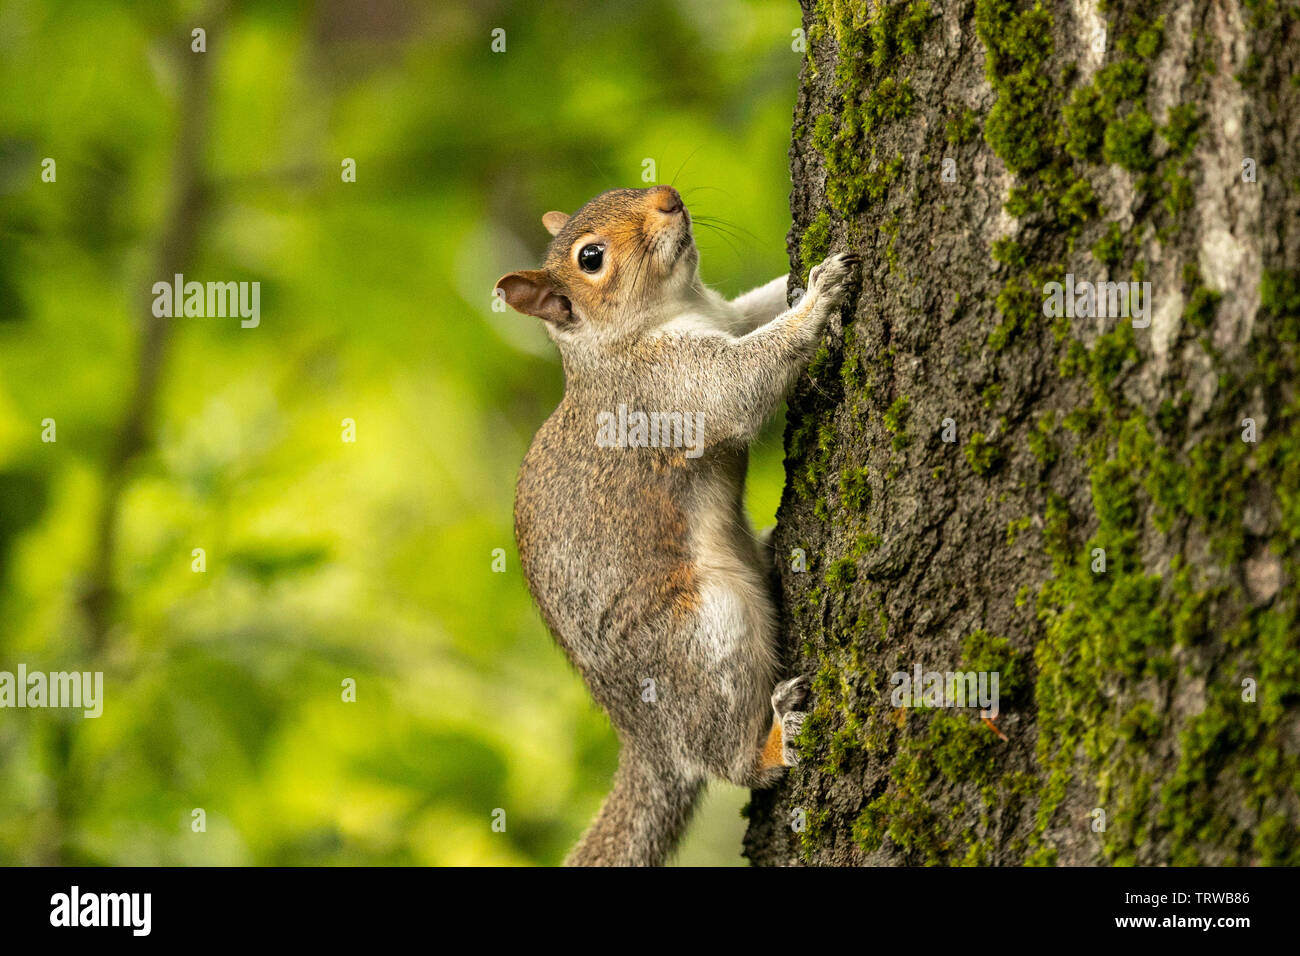 Grey squirrel (Sciurus carolinensis) - close up view in natural woodland surroundings showing animal features. Birmingham, UK Stock Photo